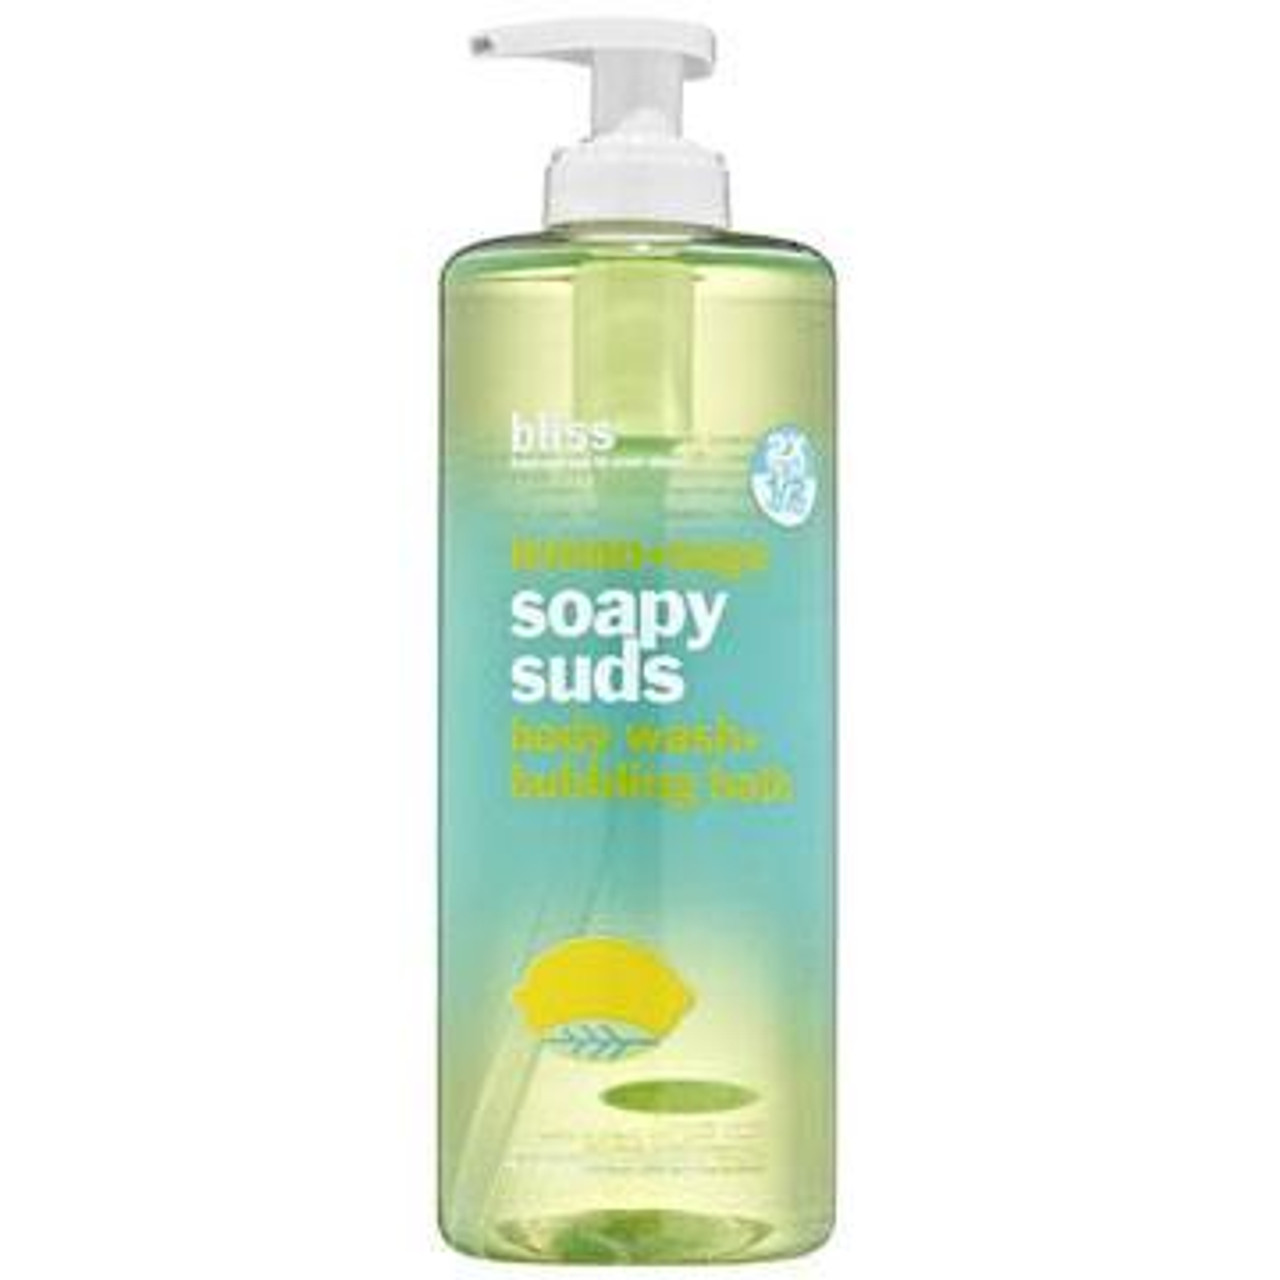 Bliss Lemon + Sage Soapy Suds Body Wash - 16 oz ® on Sale at $15.3 ...